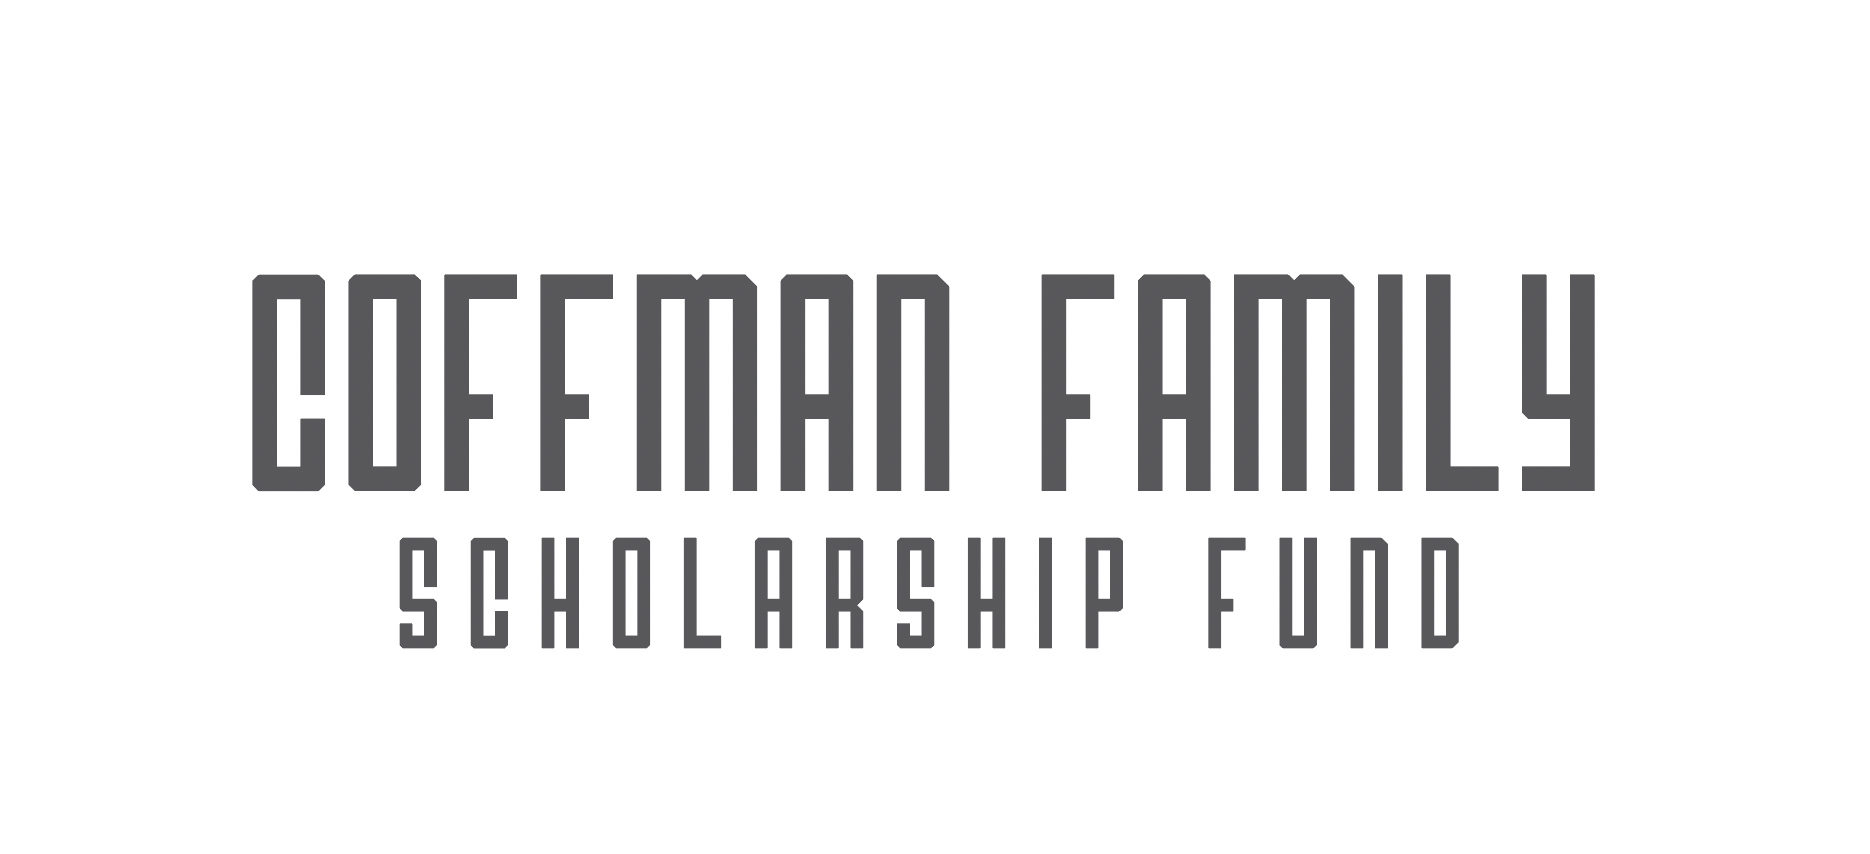 Coffman Family Scholarship Fund